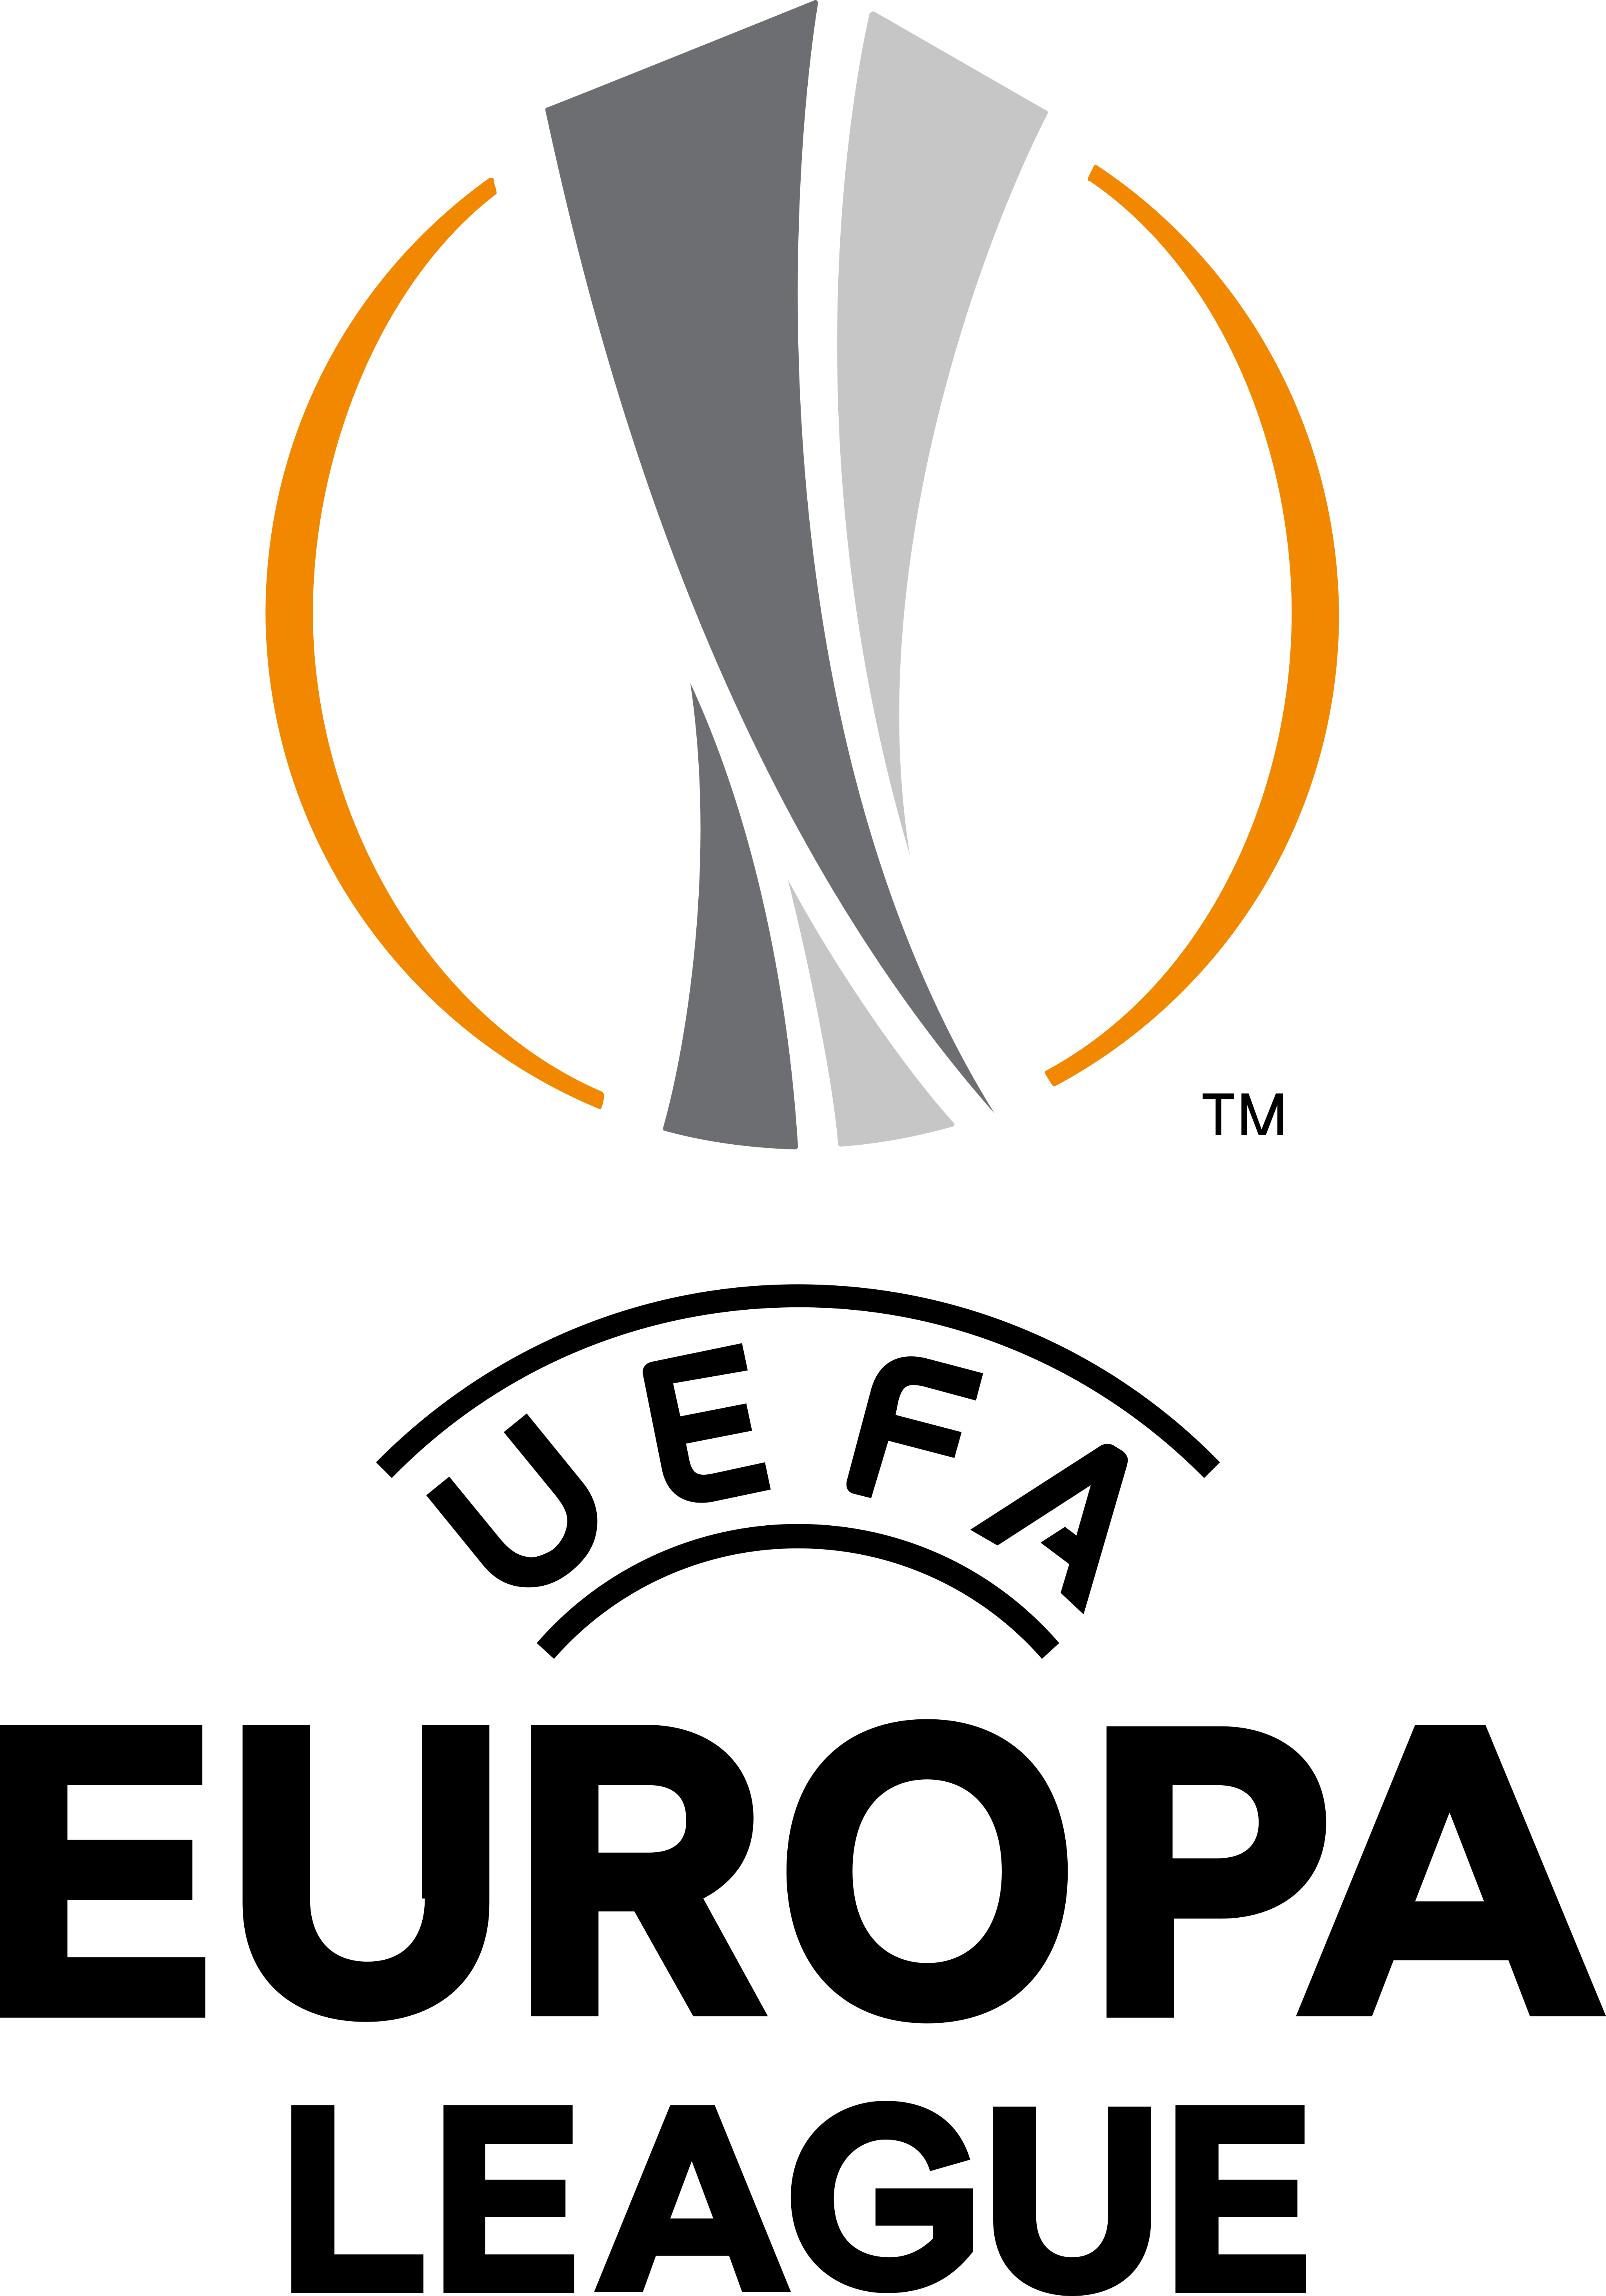 UEFA Europa League Logo - PNG and Vector - Logo Download